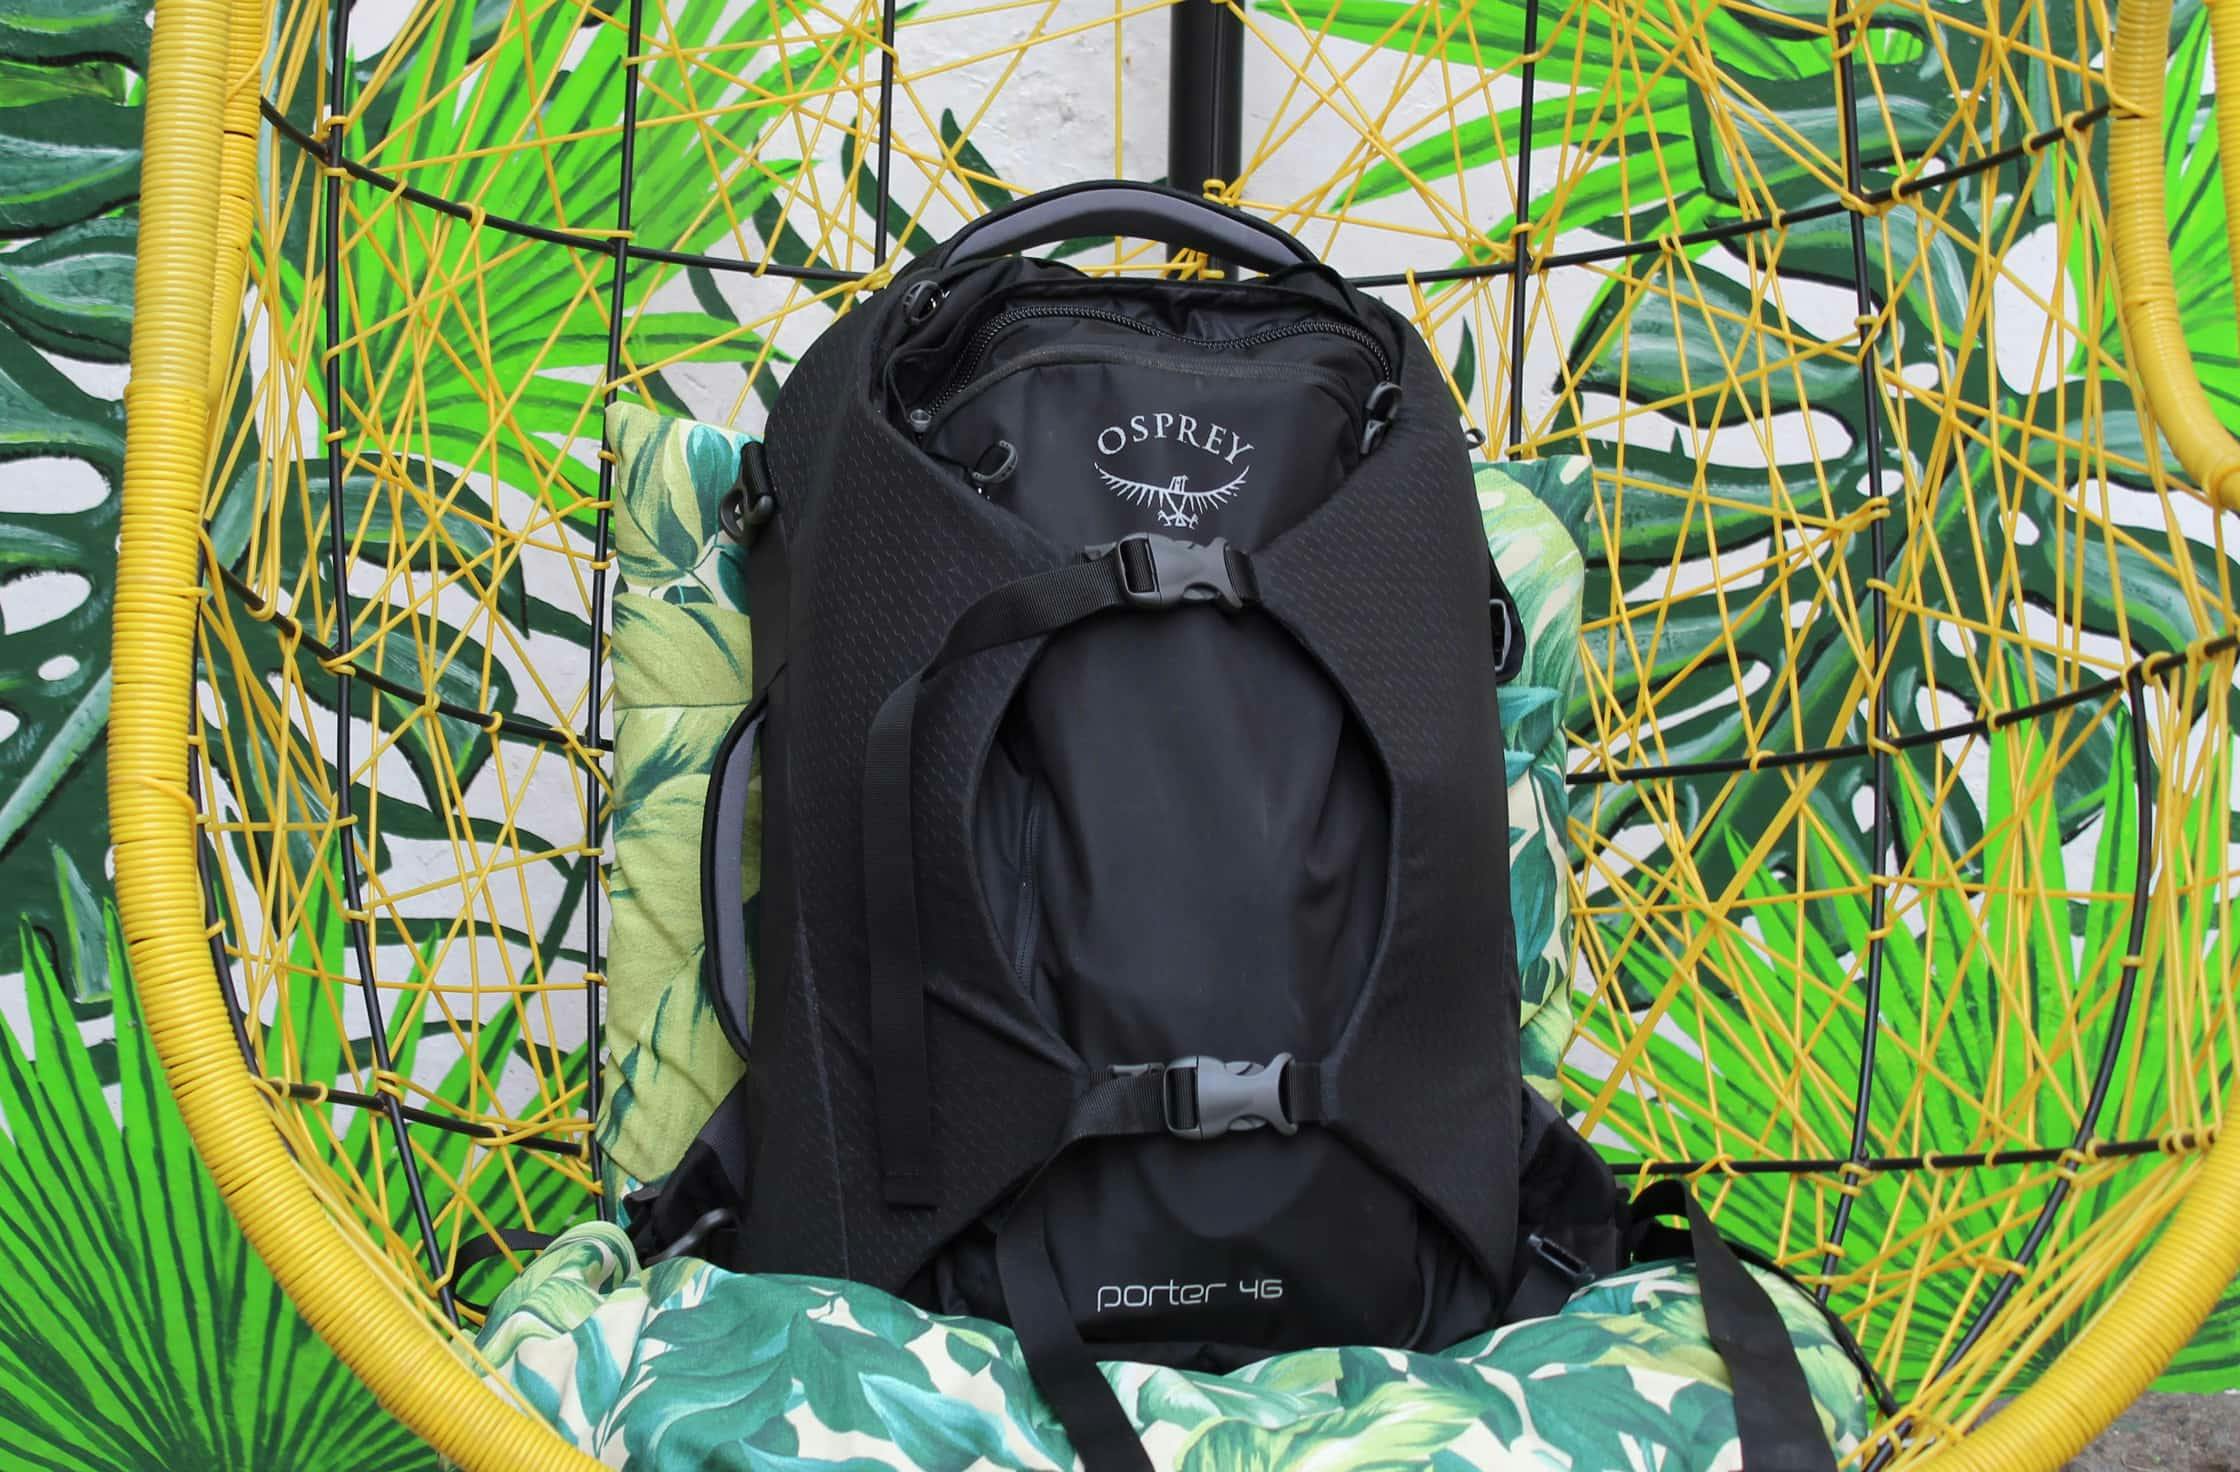 osprey porter 46 travel backpack review